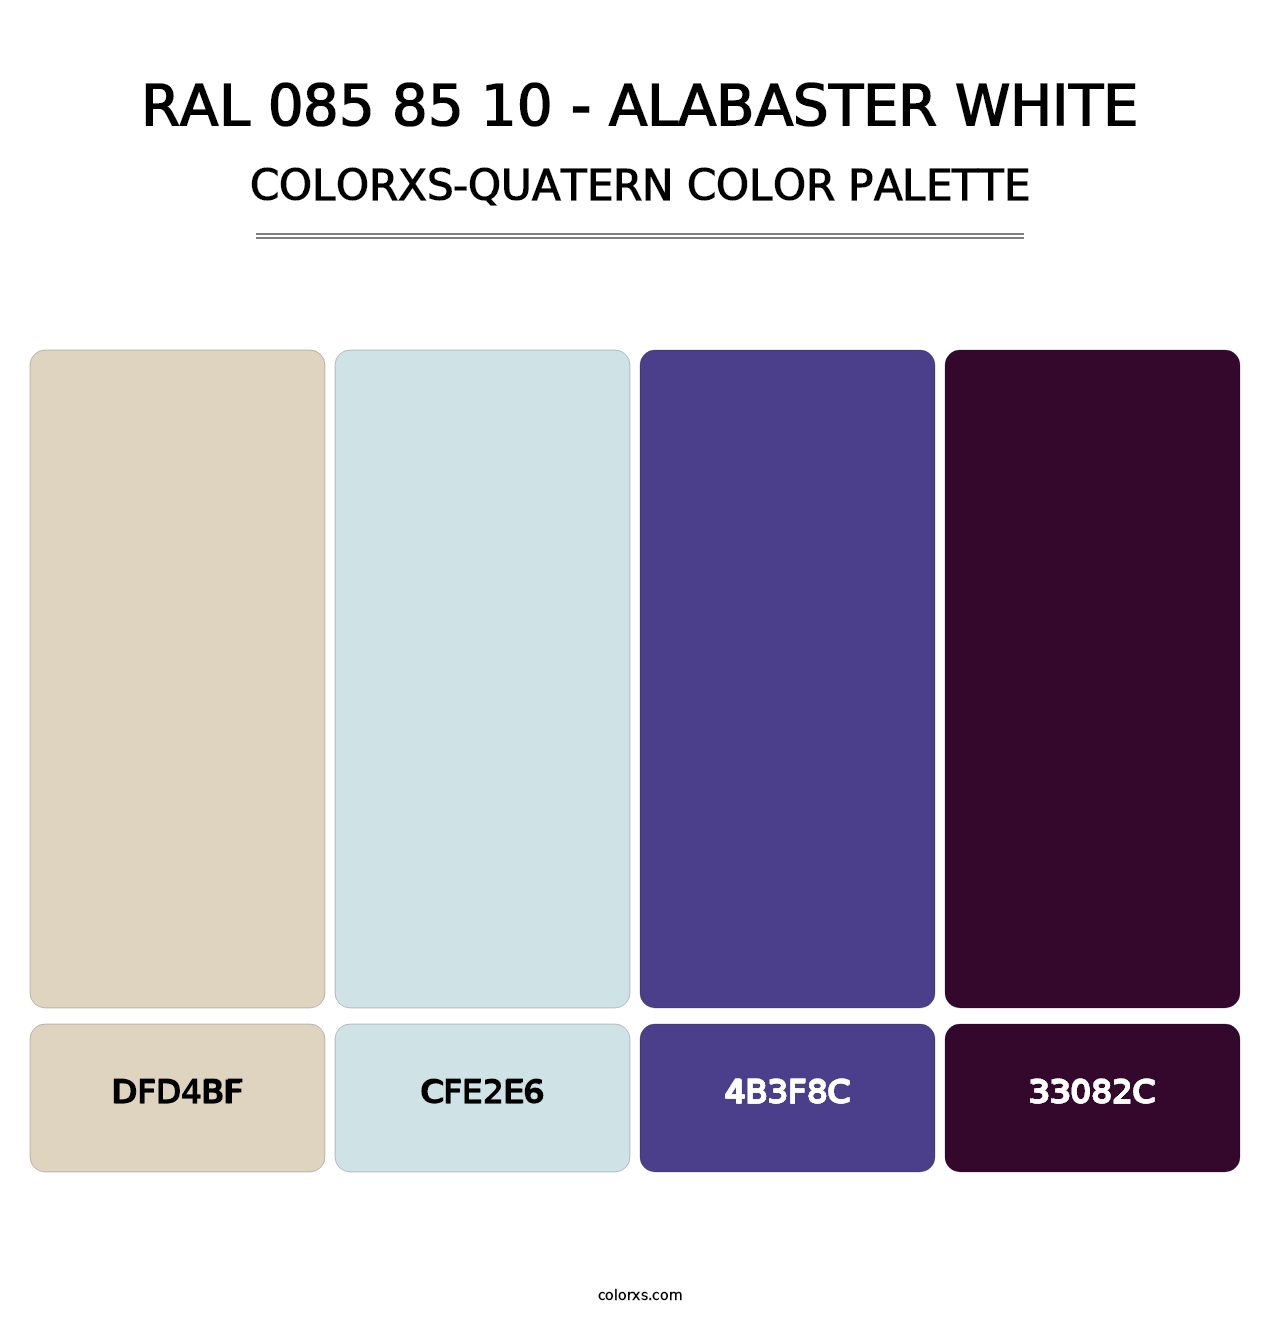 RAL 085 85 10 - Alabaster White - Colorxs Quatern Palette